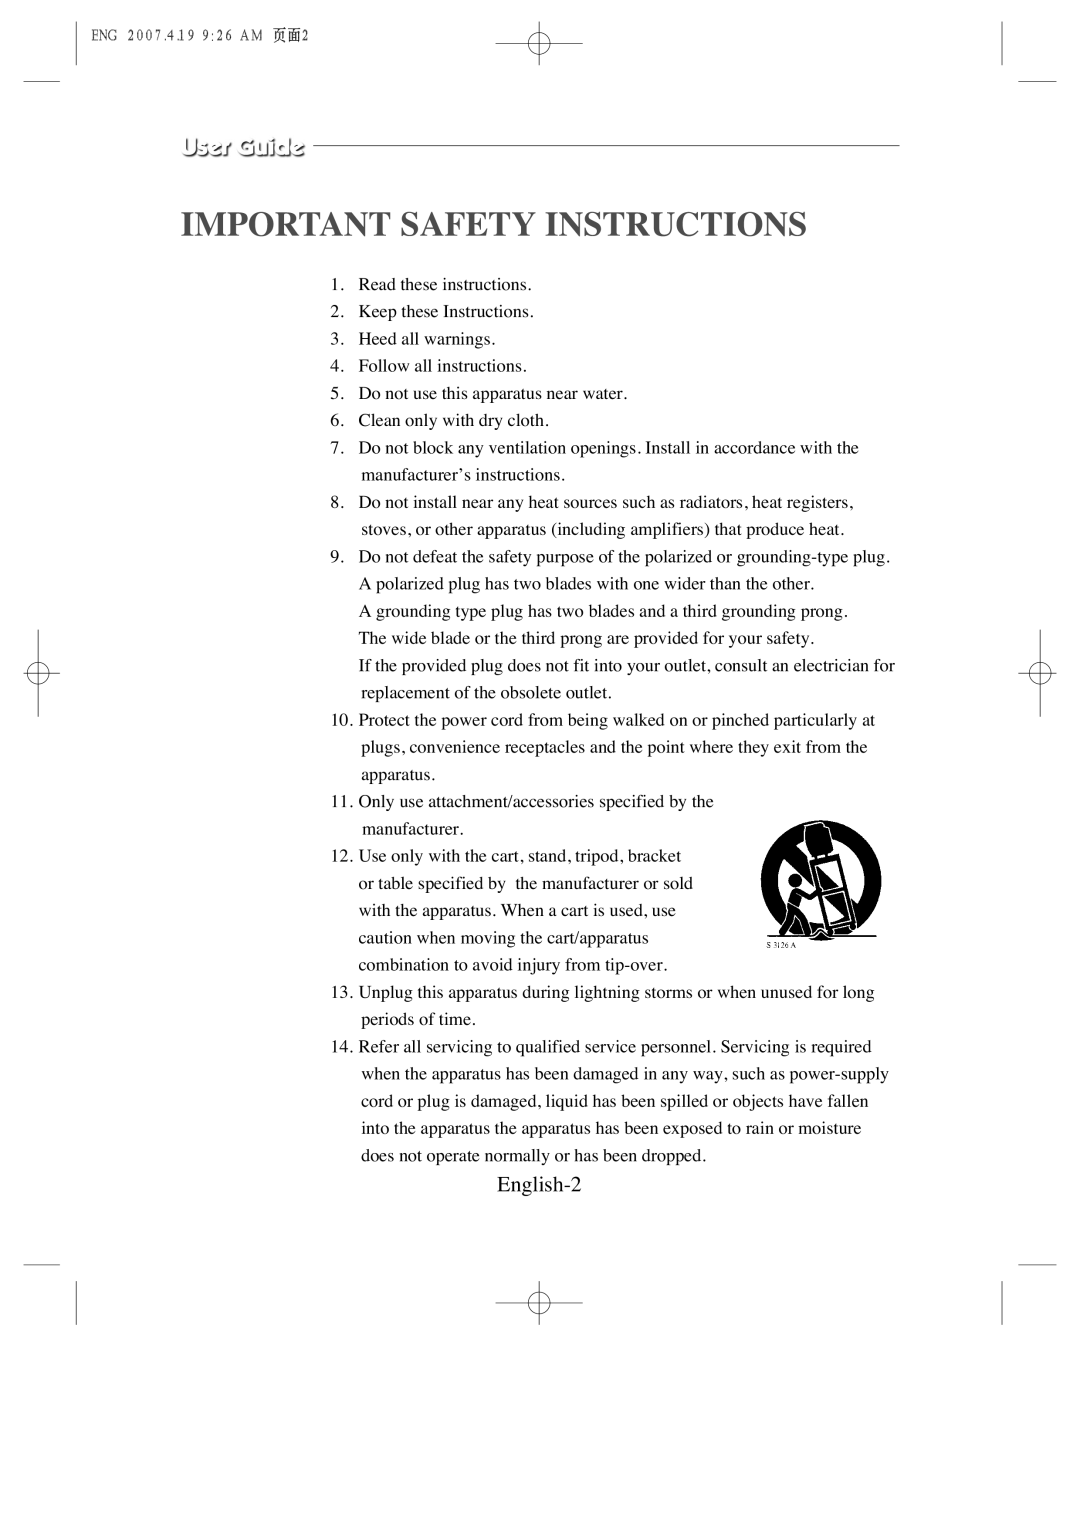 Samsung SMC-214 U, SMC-213 manual Important Safety Instructions, English-2 